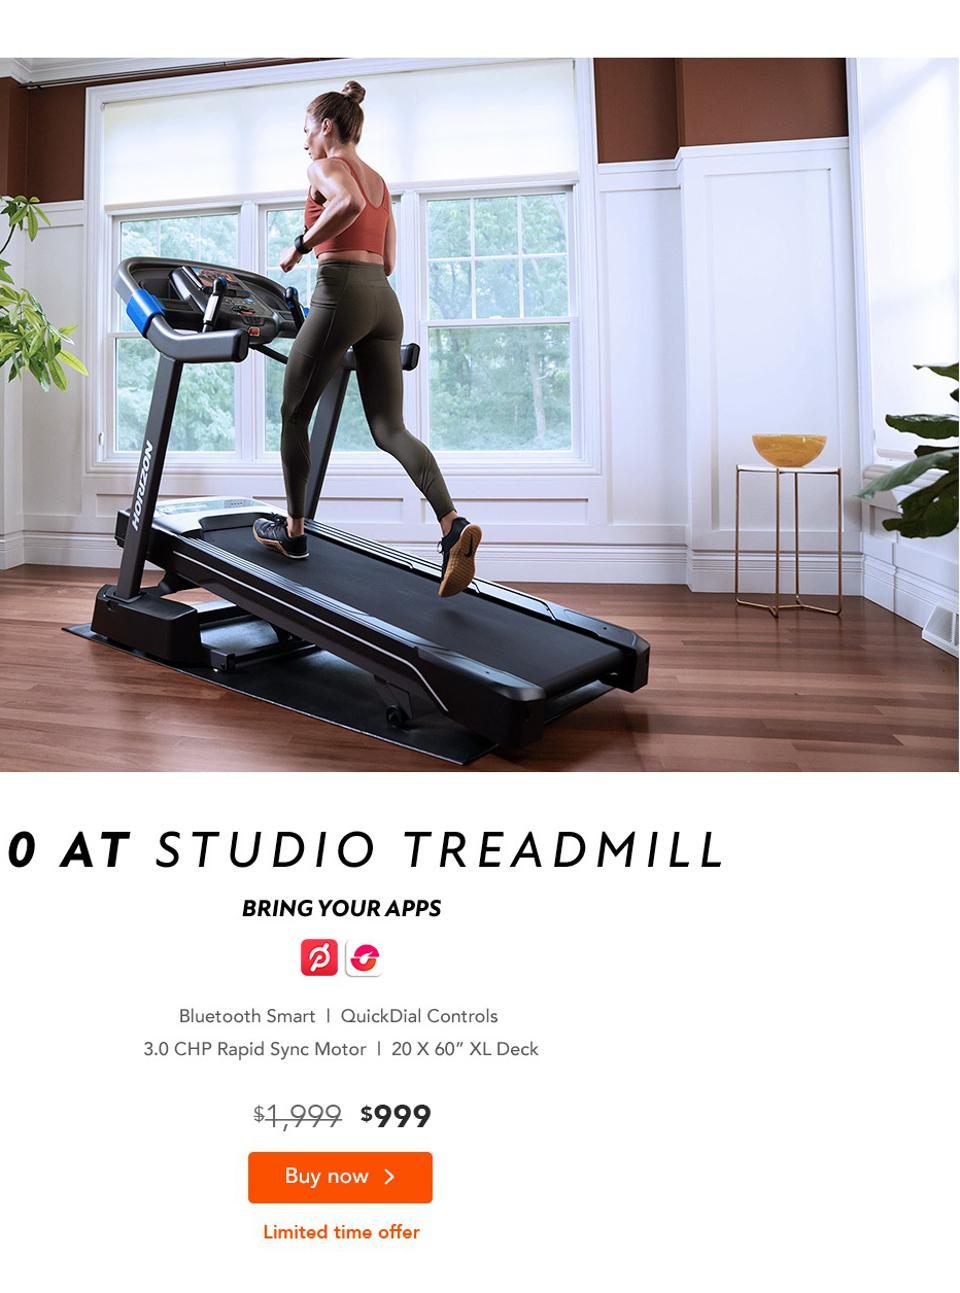 Save Up To $1,000 On Horizon Fitness Treadmills